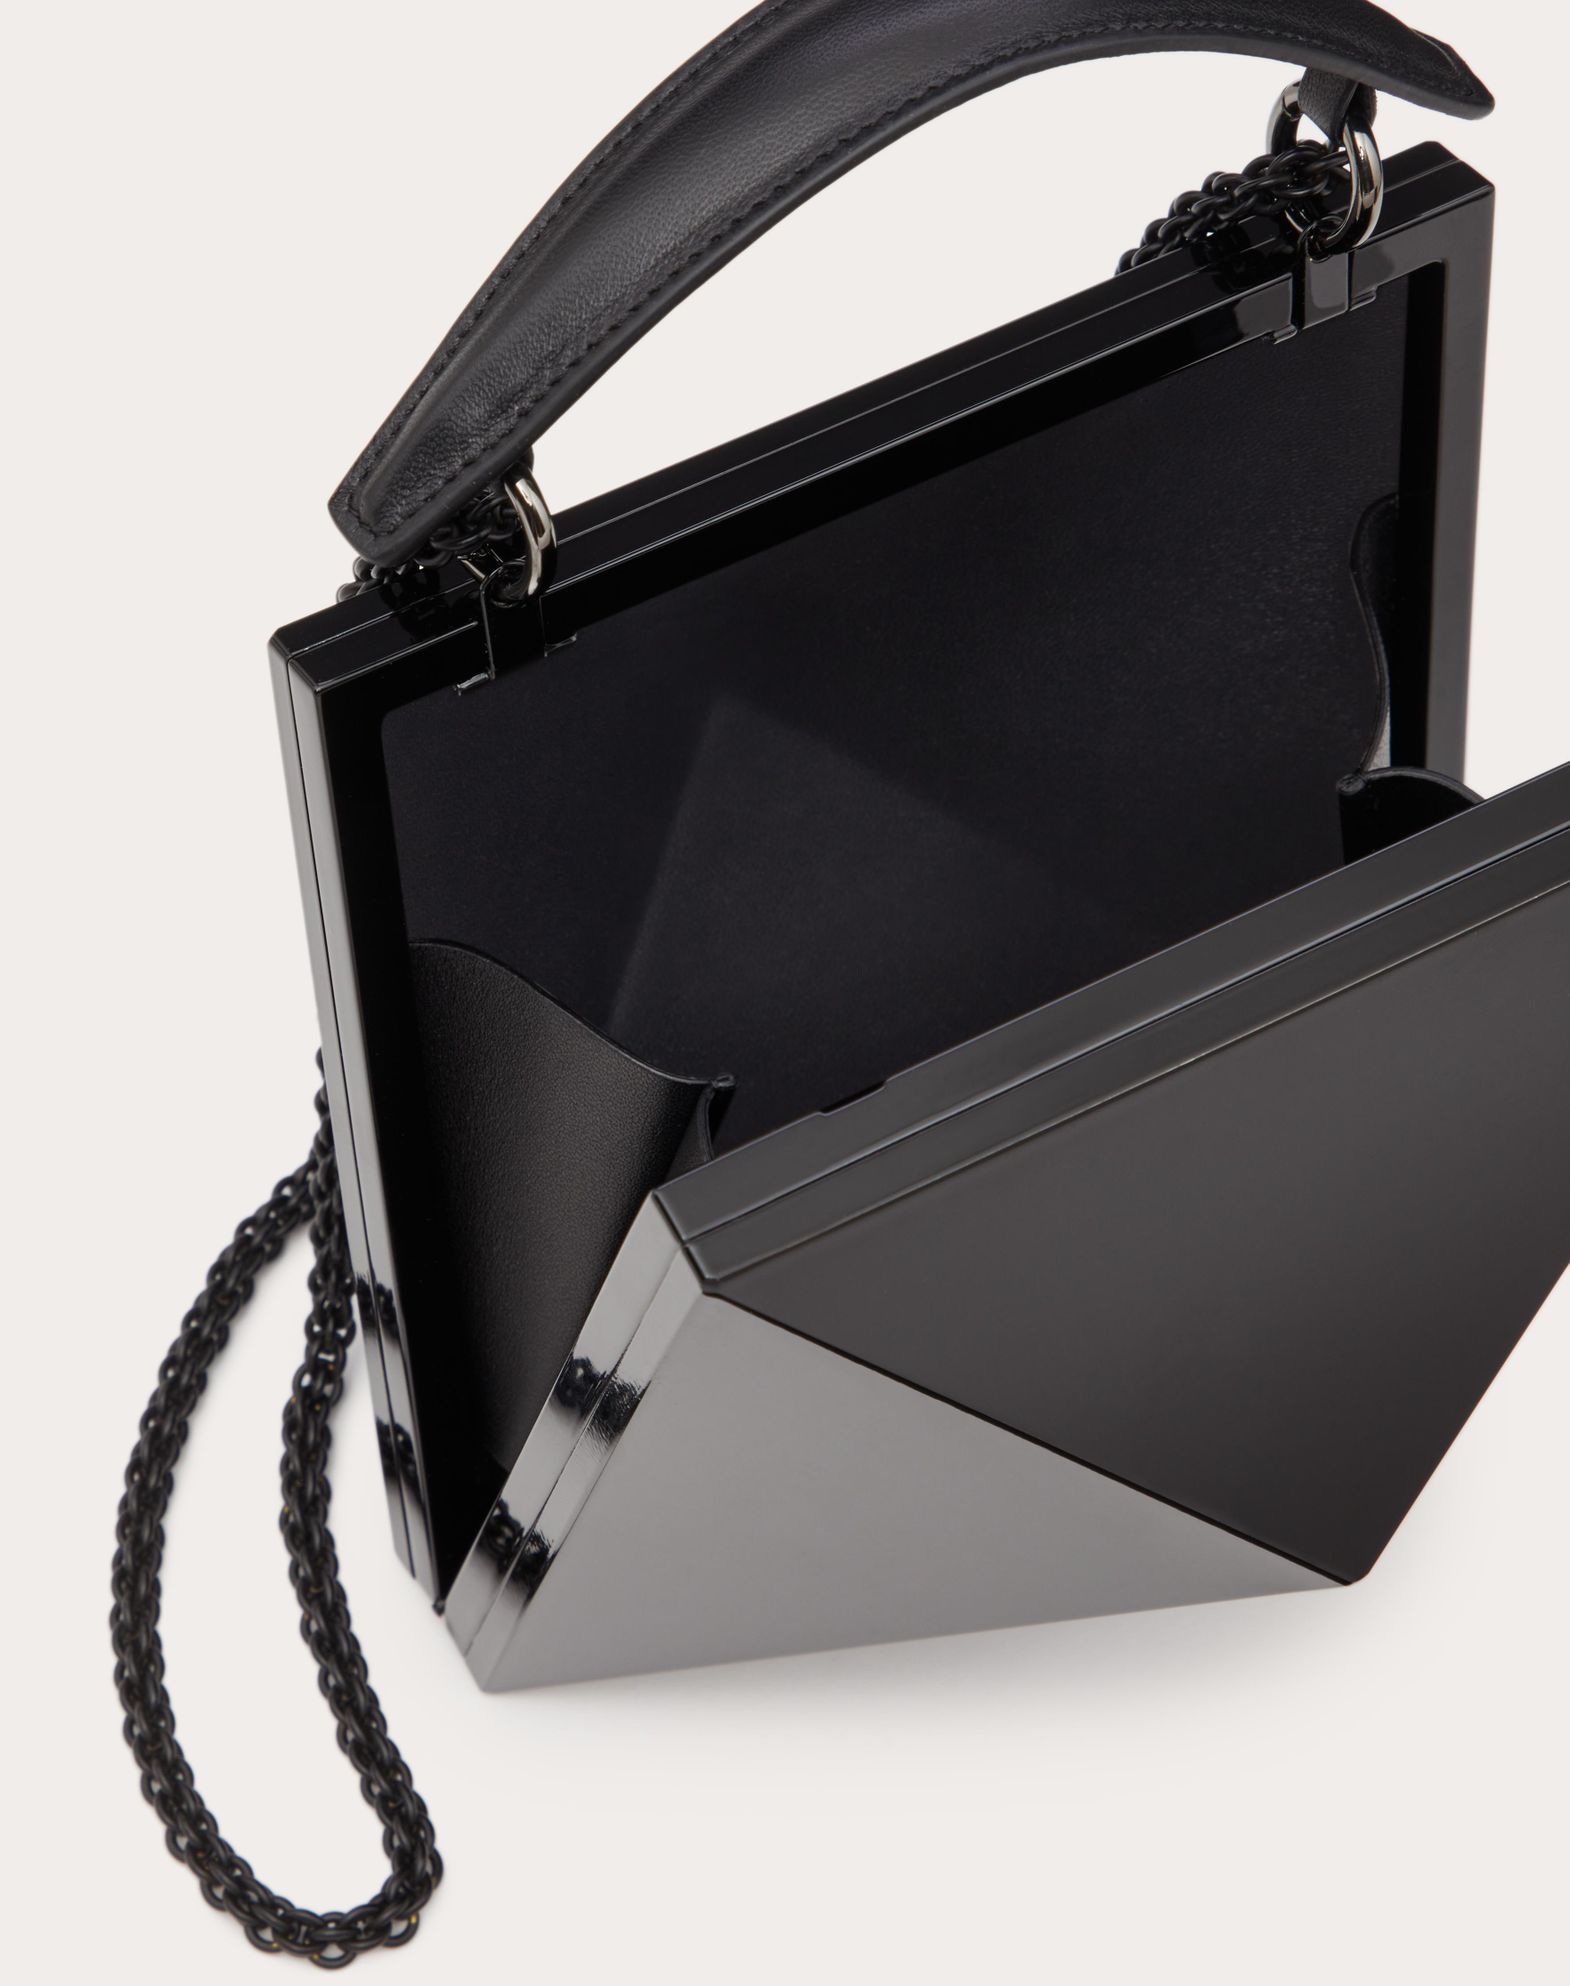 Image of a black Valentino Garavani clutch bag